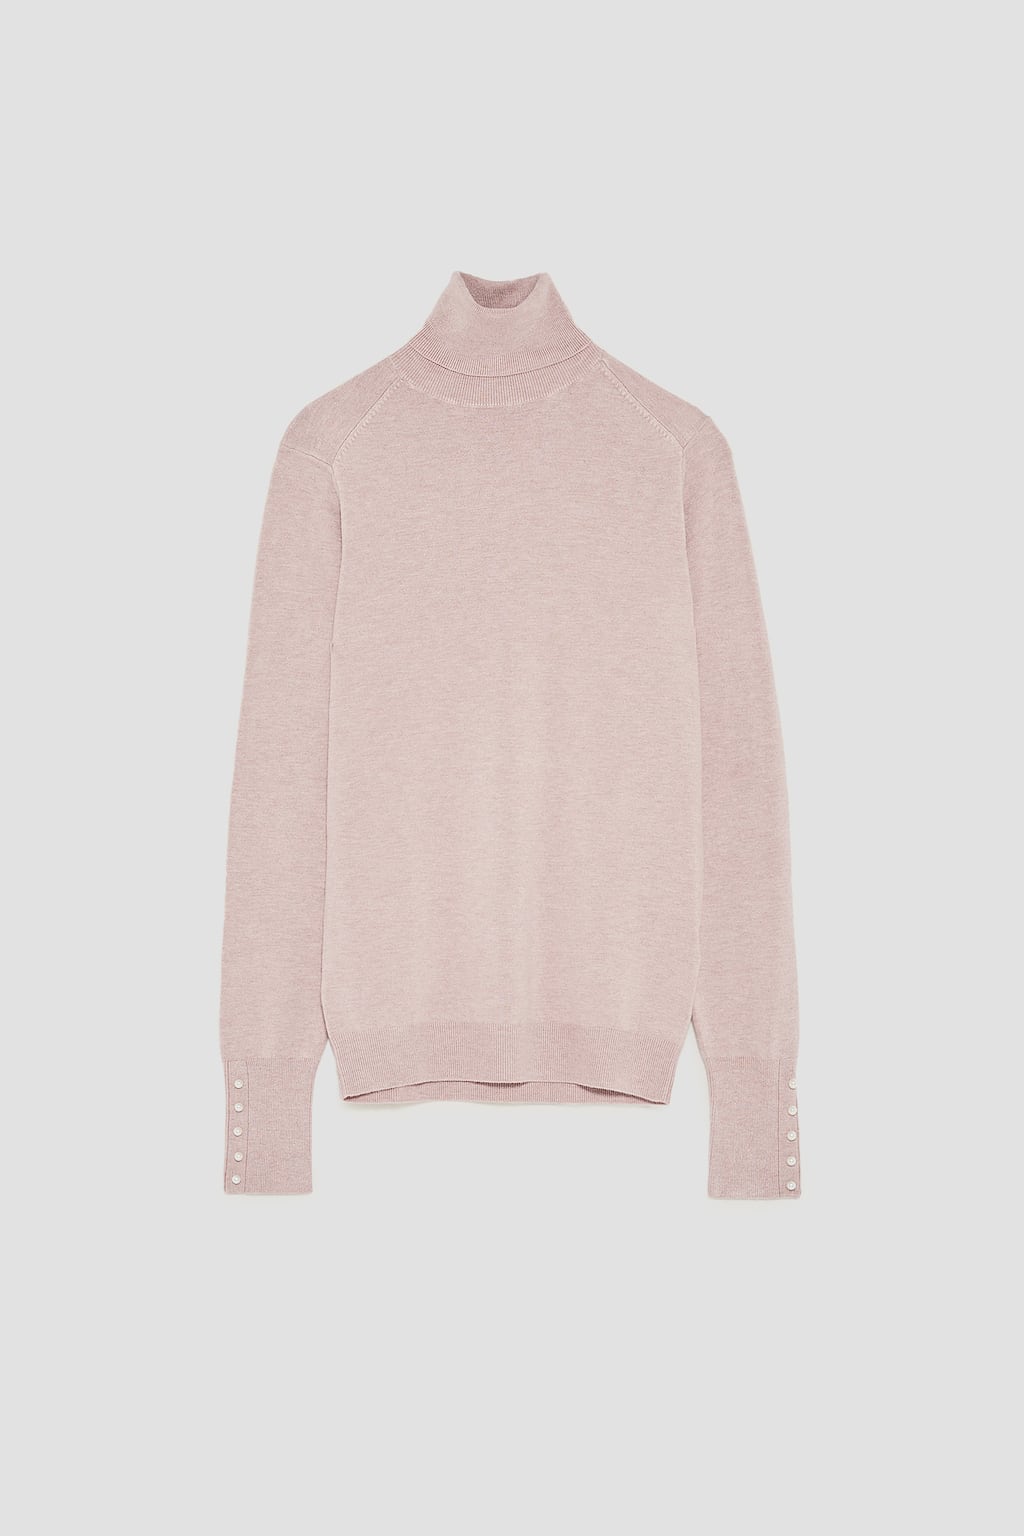 Zara Pearl Buttons Turtleneck Sweater 